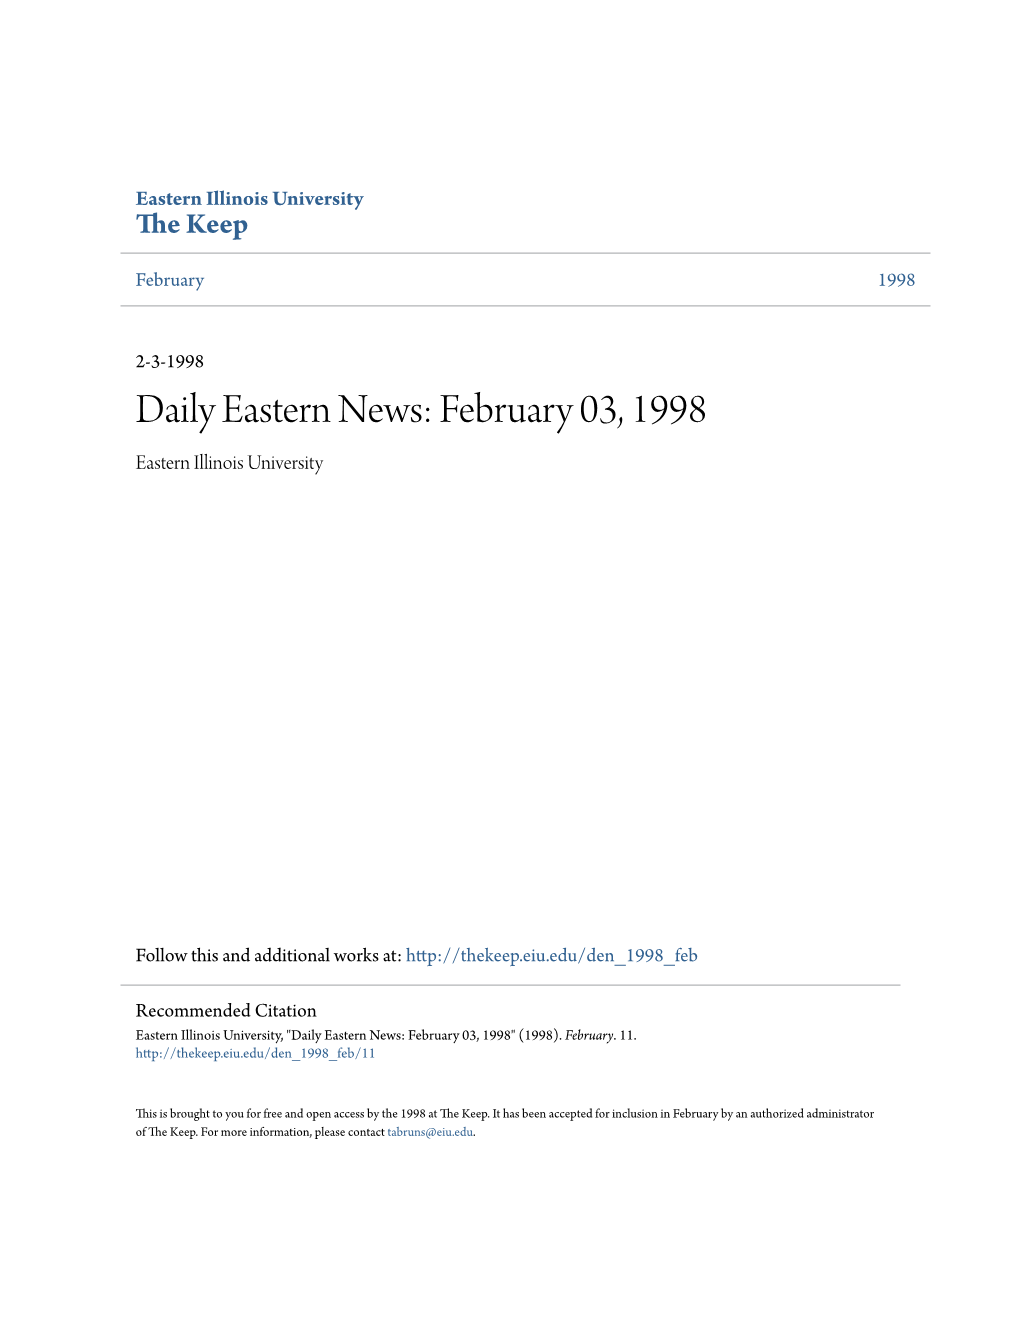 Daily Eastern News: February 03, 1998 Eastern Illinois University